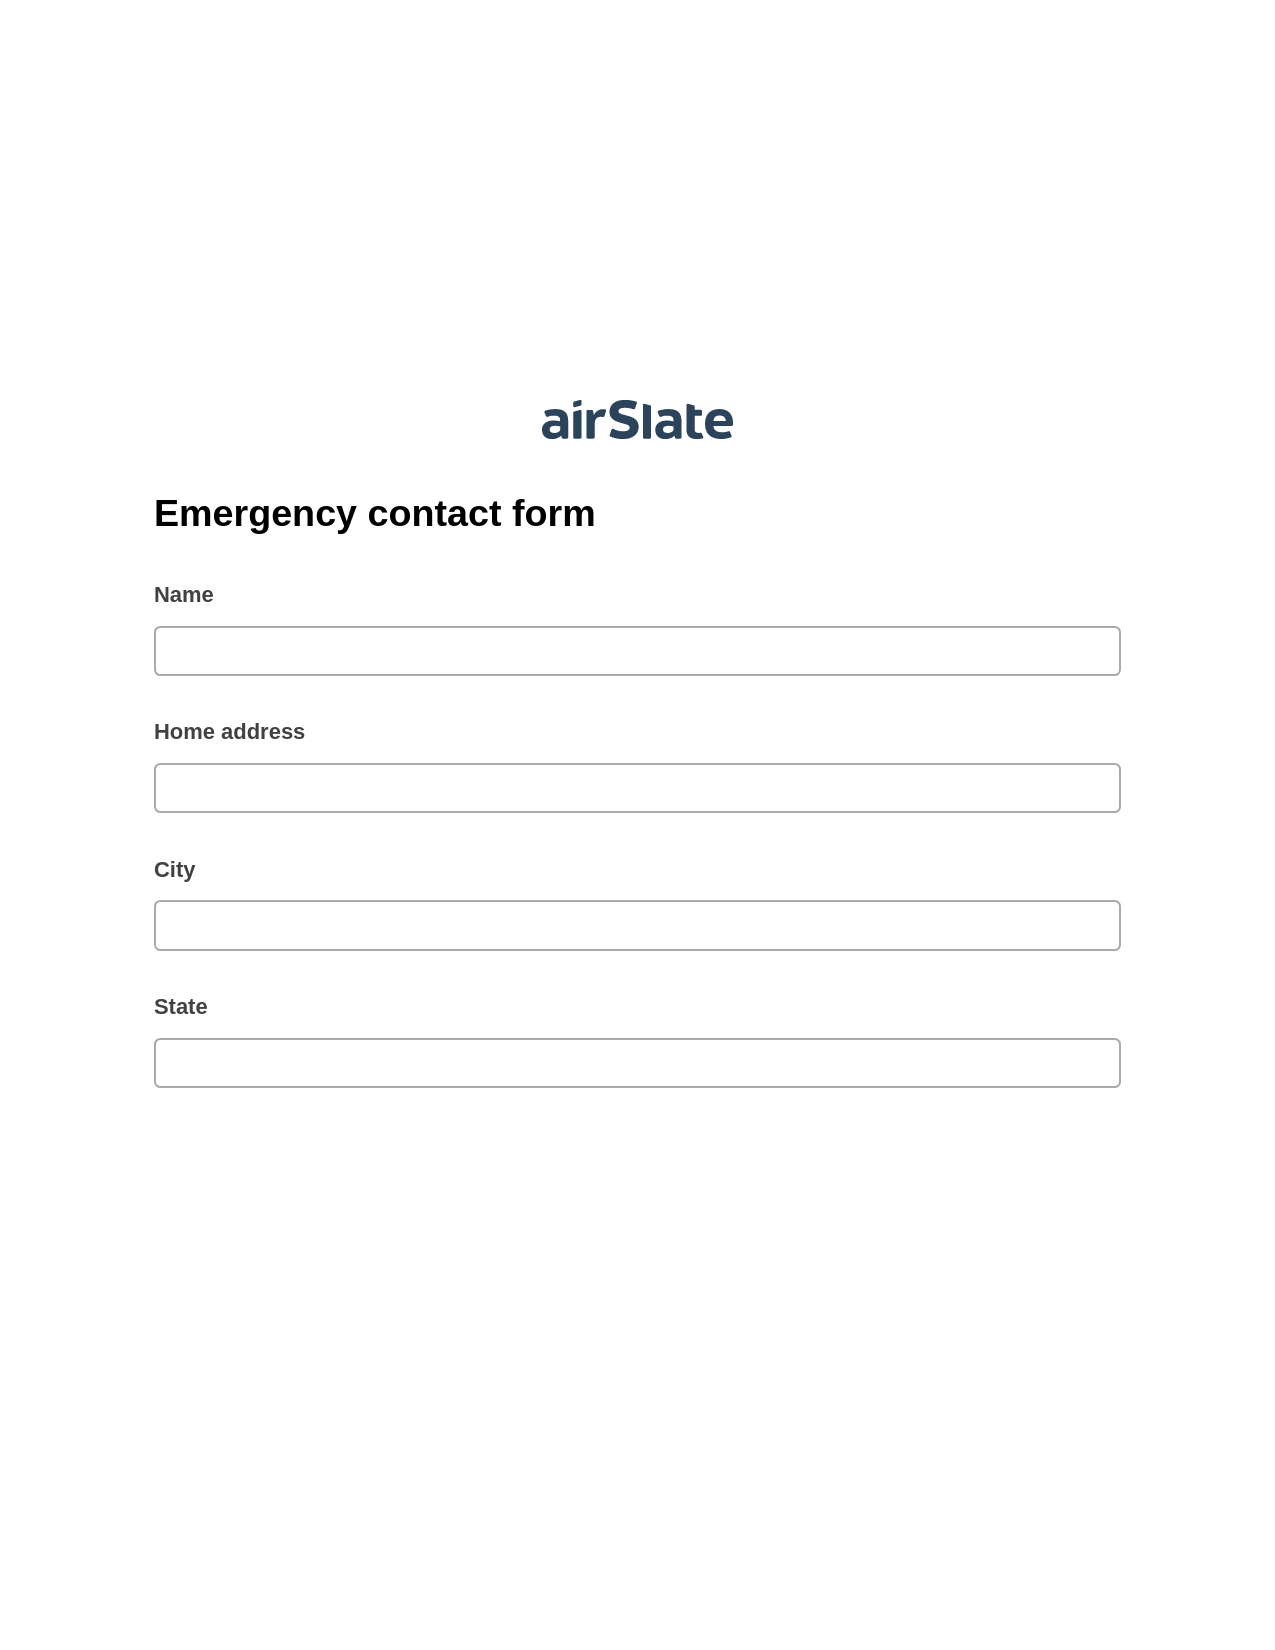 Multirole Emergency contact form Pre-fill from Google Sheets Bot, Reminder Bot, Webhook Postfinish Bot